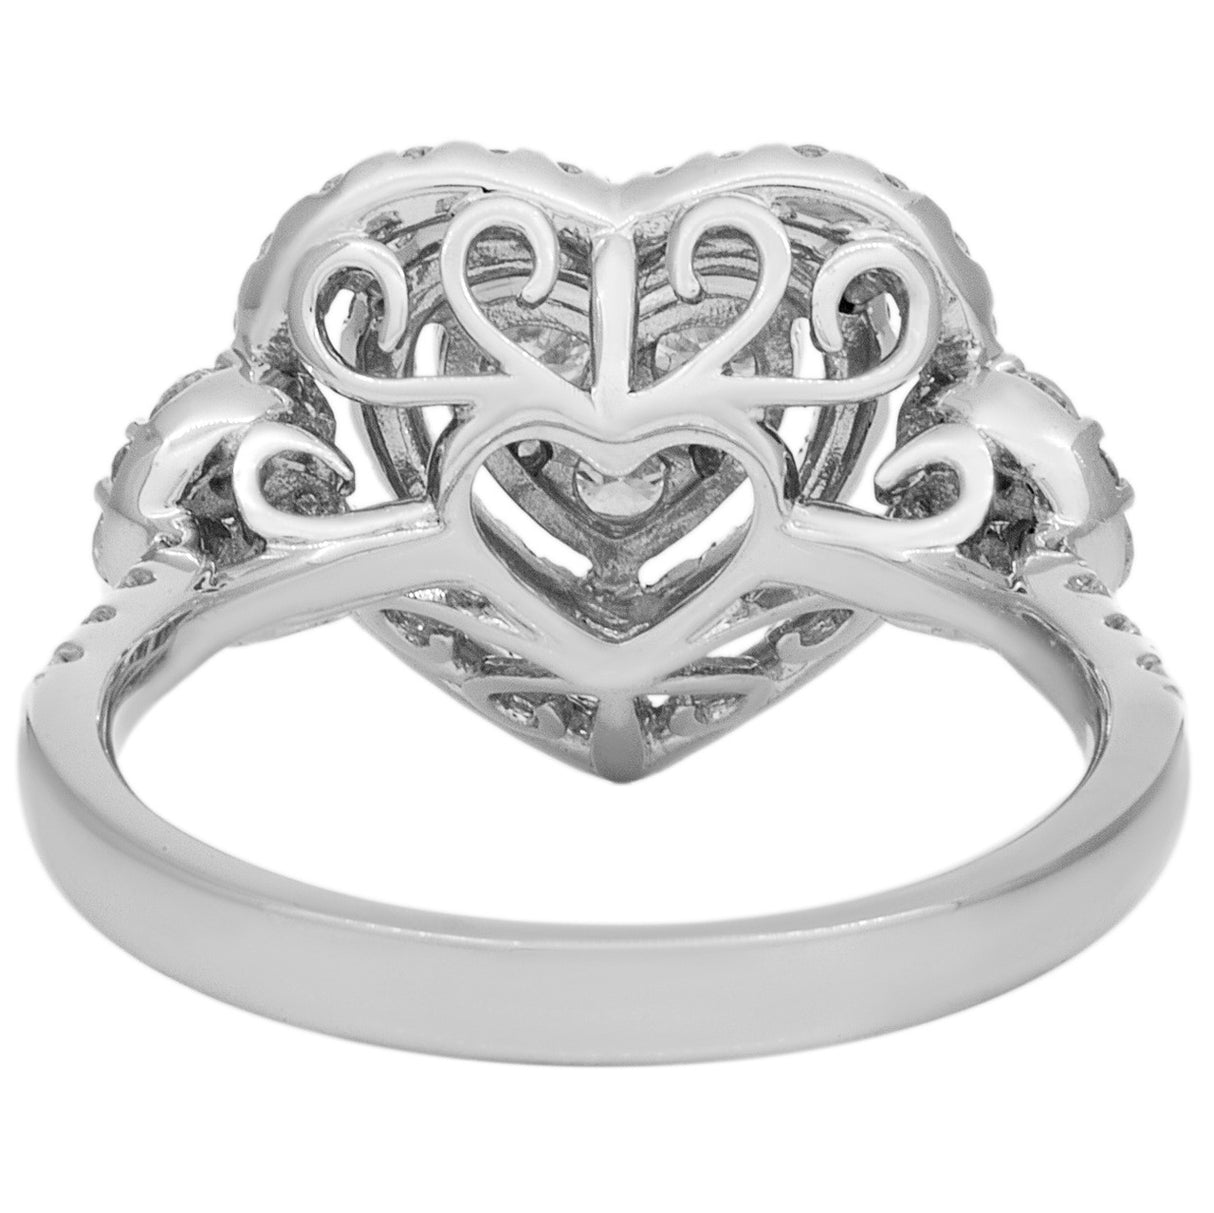 18K White Gold 1.29 Carat Pave Diamond Heart Ring